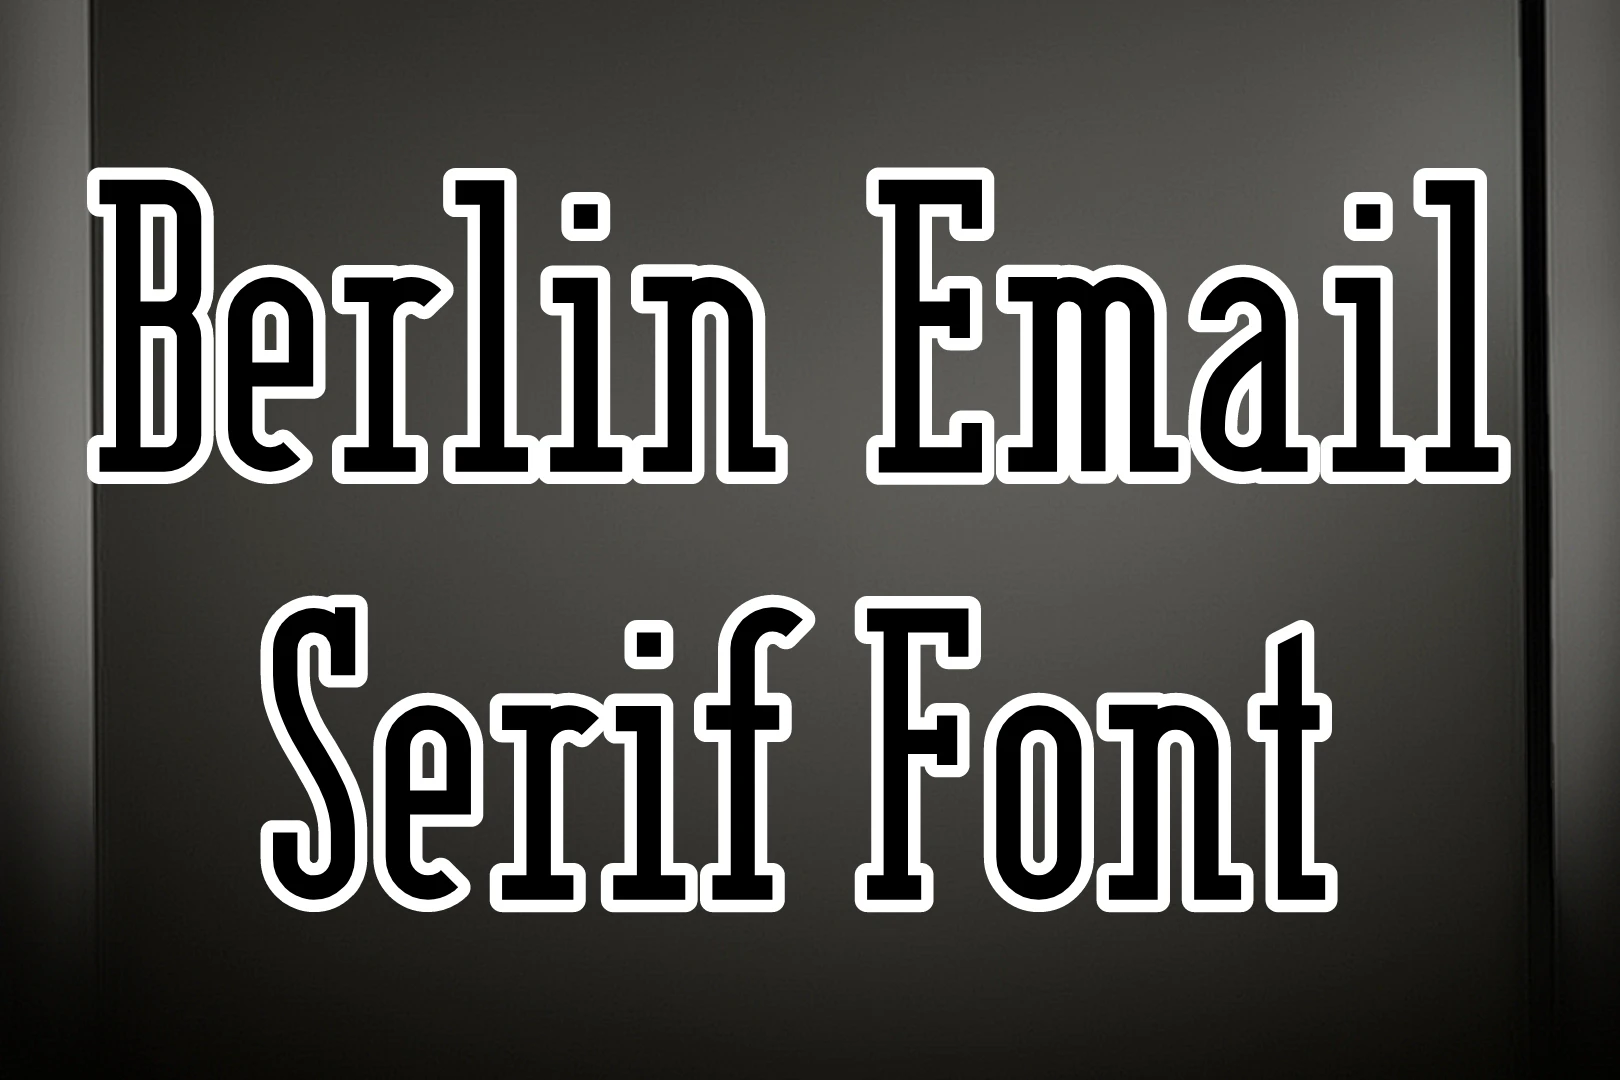 Berlin Email Serif Font